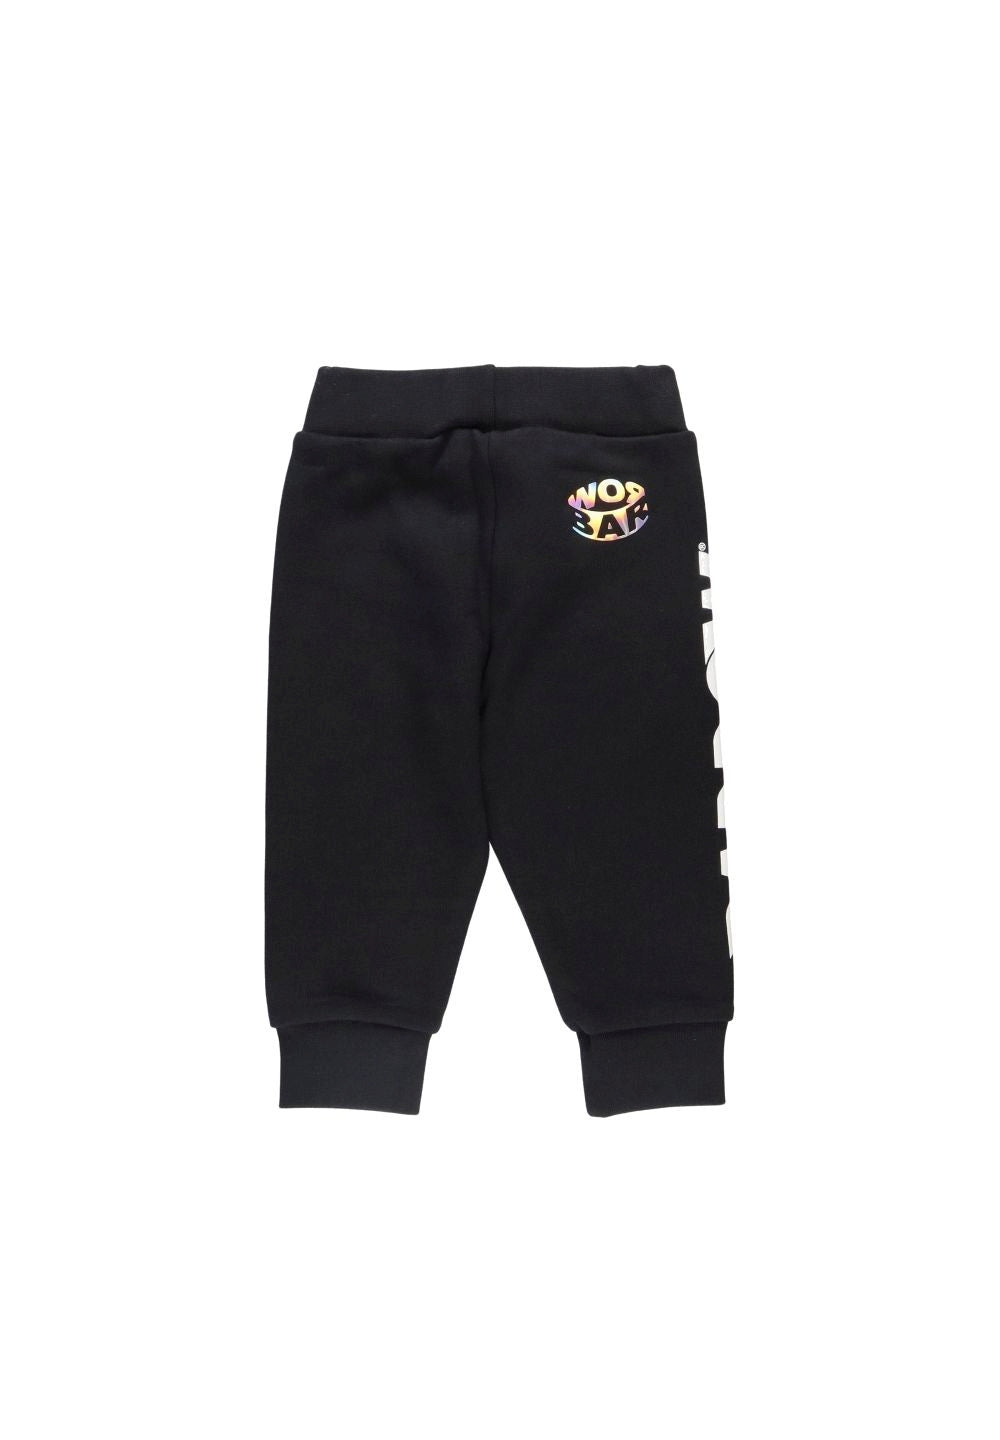 Pantalone felpa nero per bambino - Primamoda kids